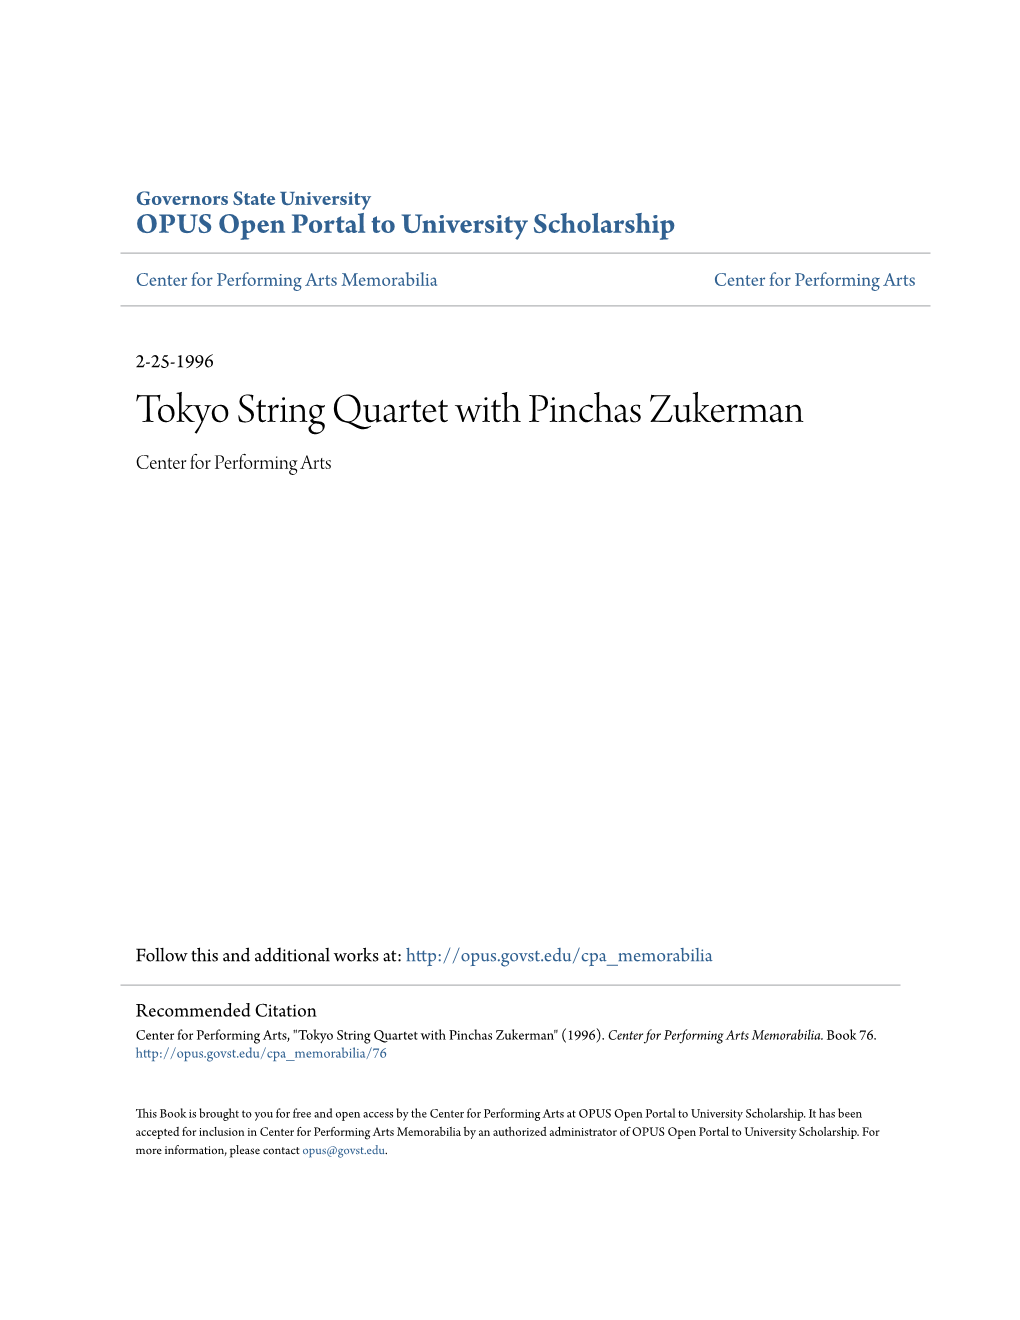 Tokyo String Quartet with Pinchas Zukerman Center for Performing Arts